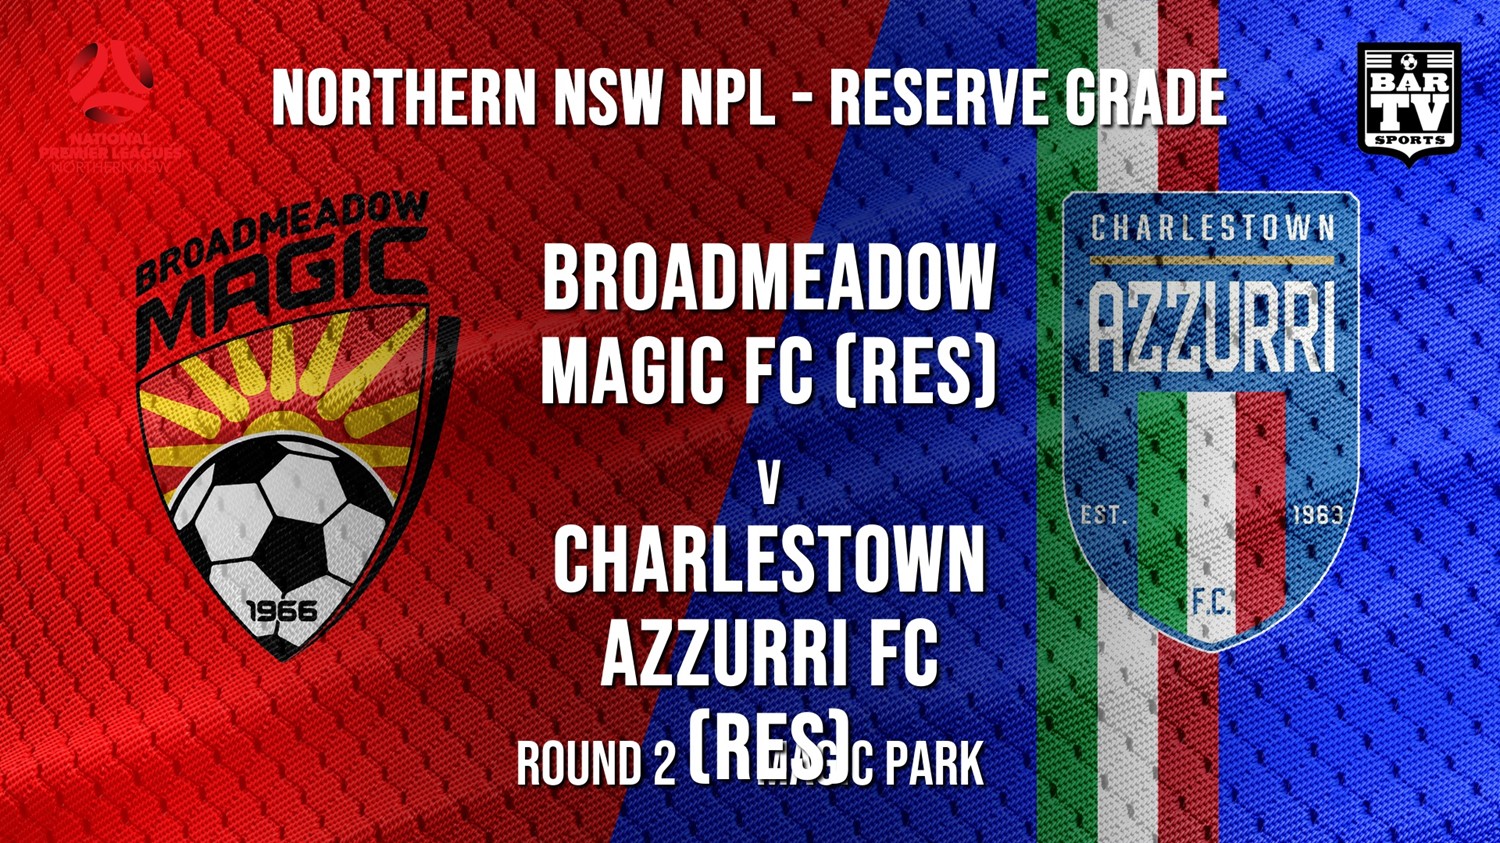 NPL NNSW RES Round 2 - Broadmeadow Magic FC (Res) v Charlestown Azzurri FC (Res) Minigame Slate Image